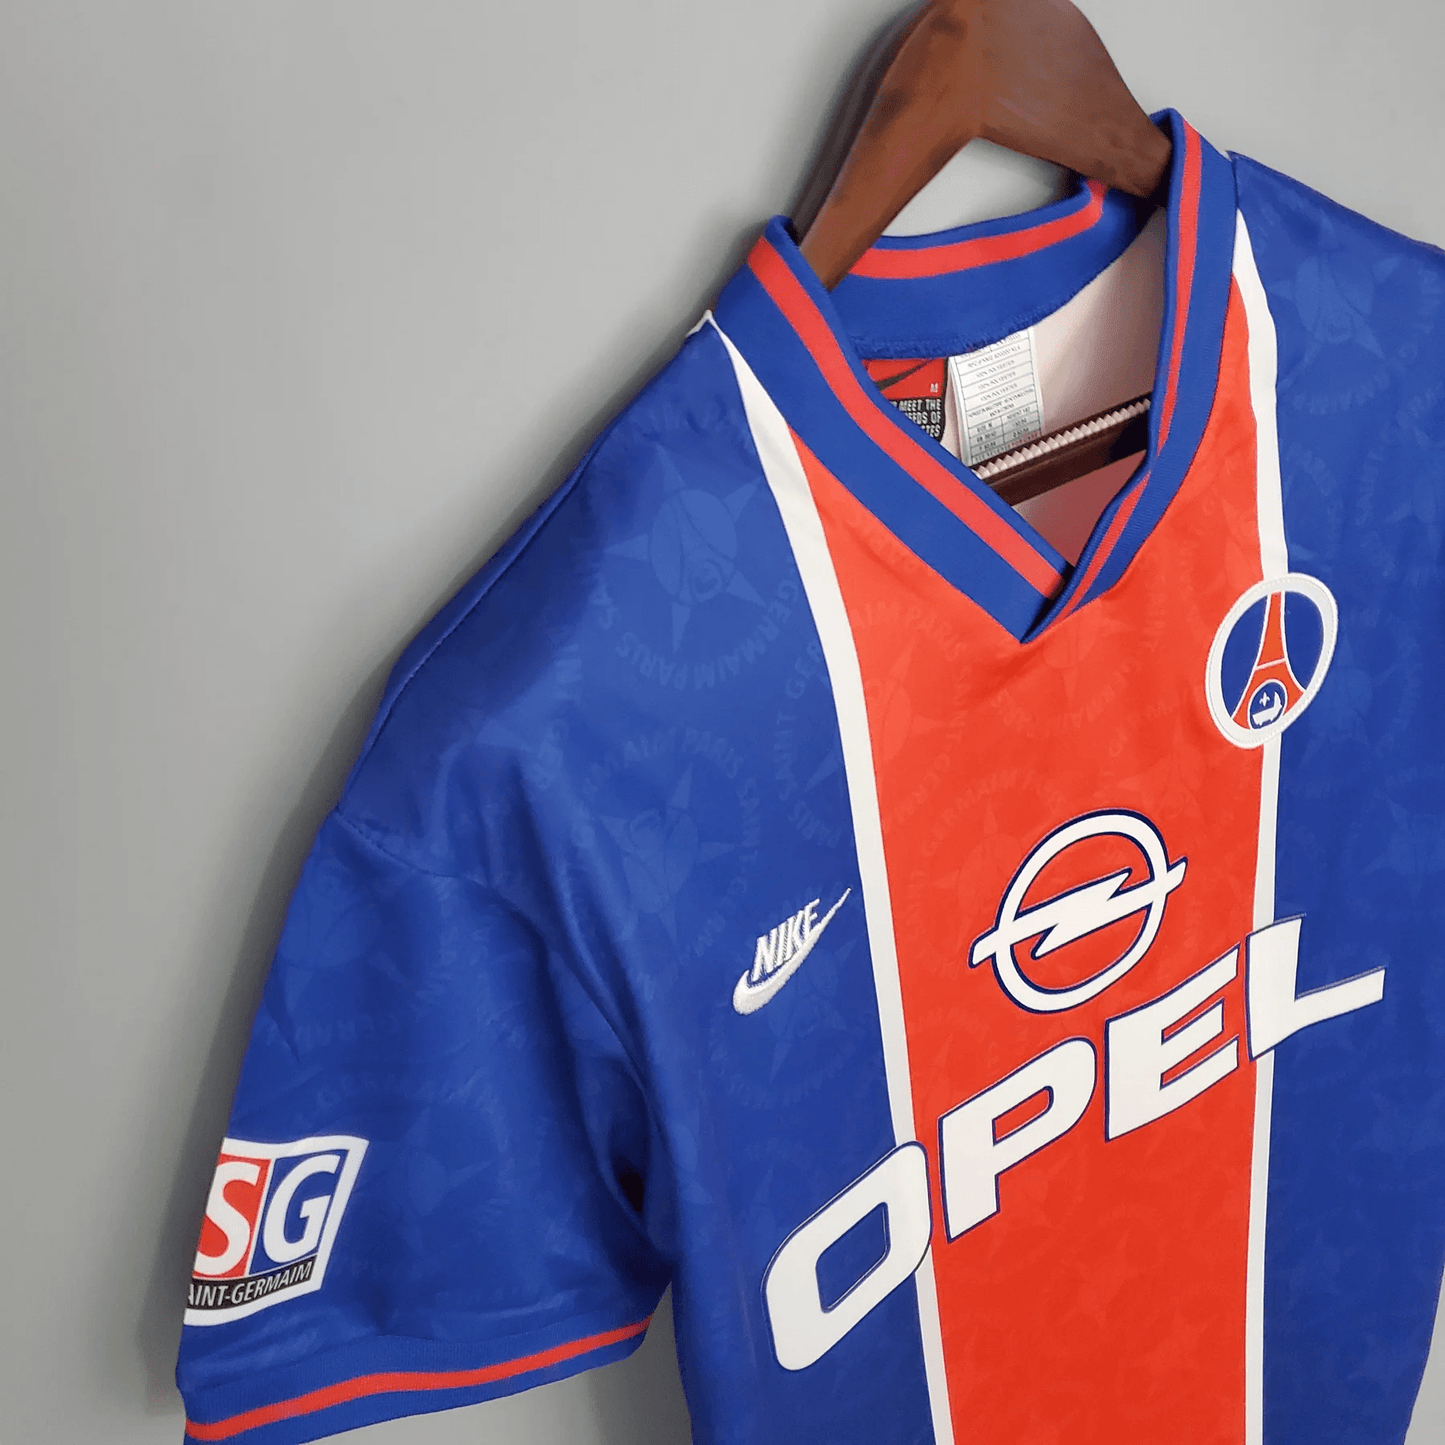 PSG PARIS SAINT GERMAIN 1995/96 Away Football Shirt M Soccer Jersey NIKE  #Nike #Jerseys